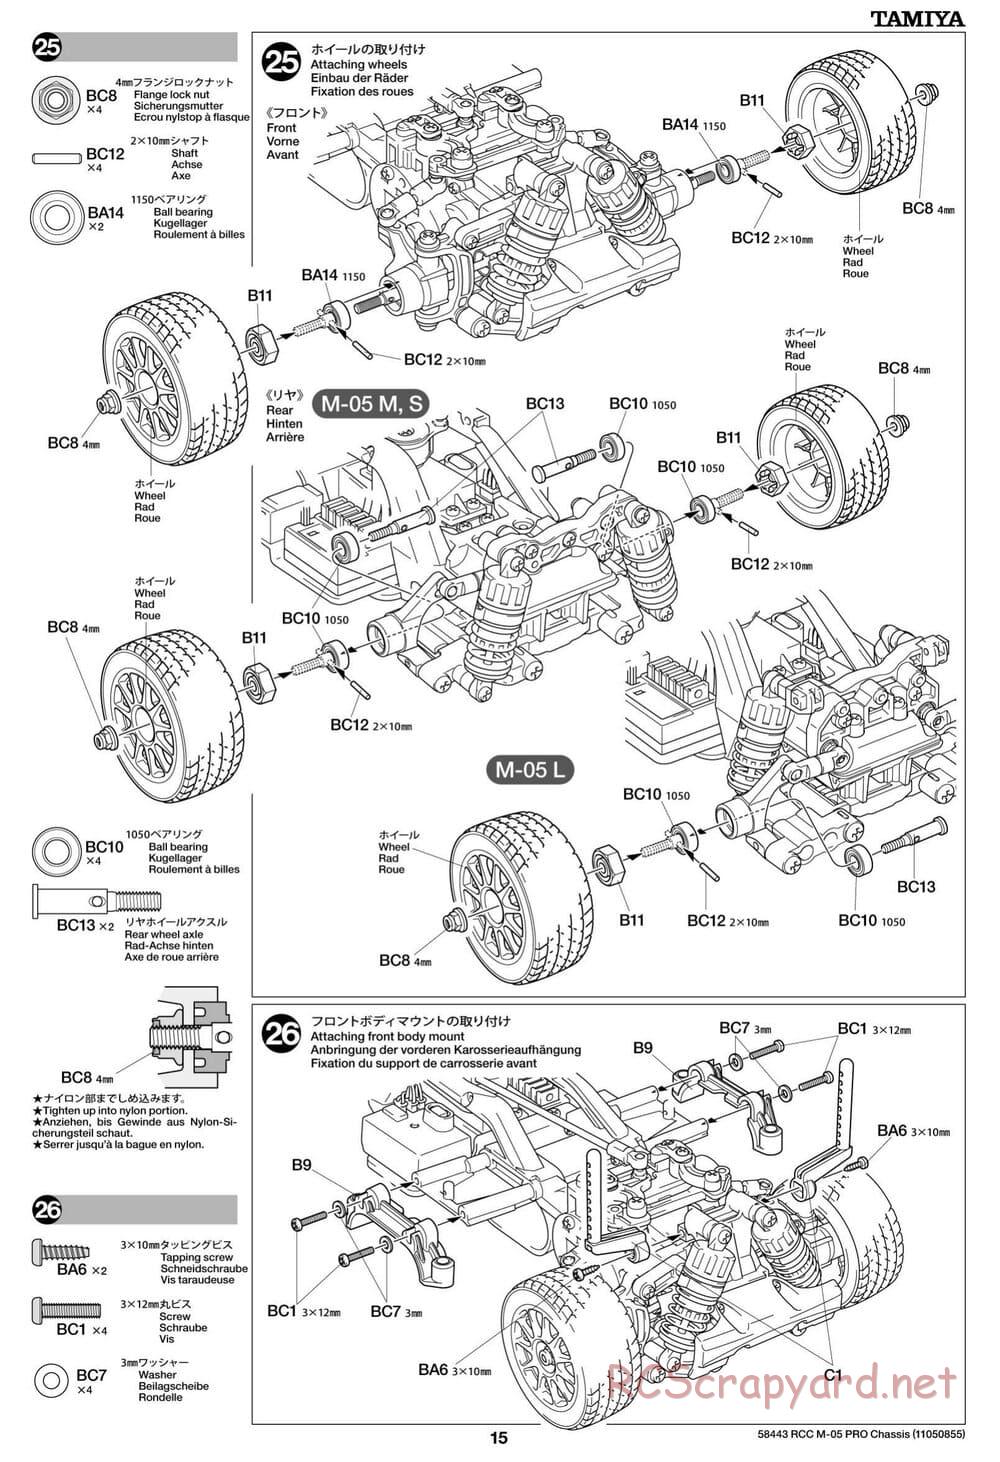 Tamiya - M05-Pro Chassis - Manual - Page 15